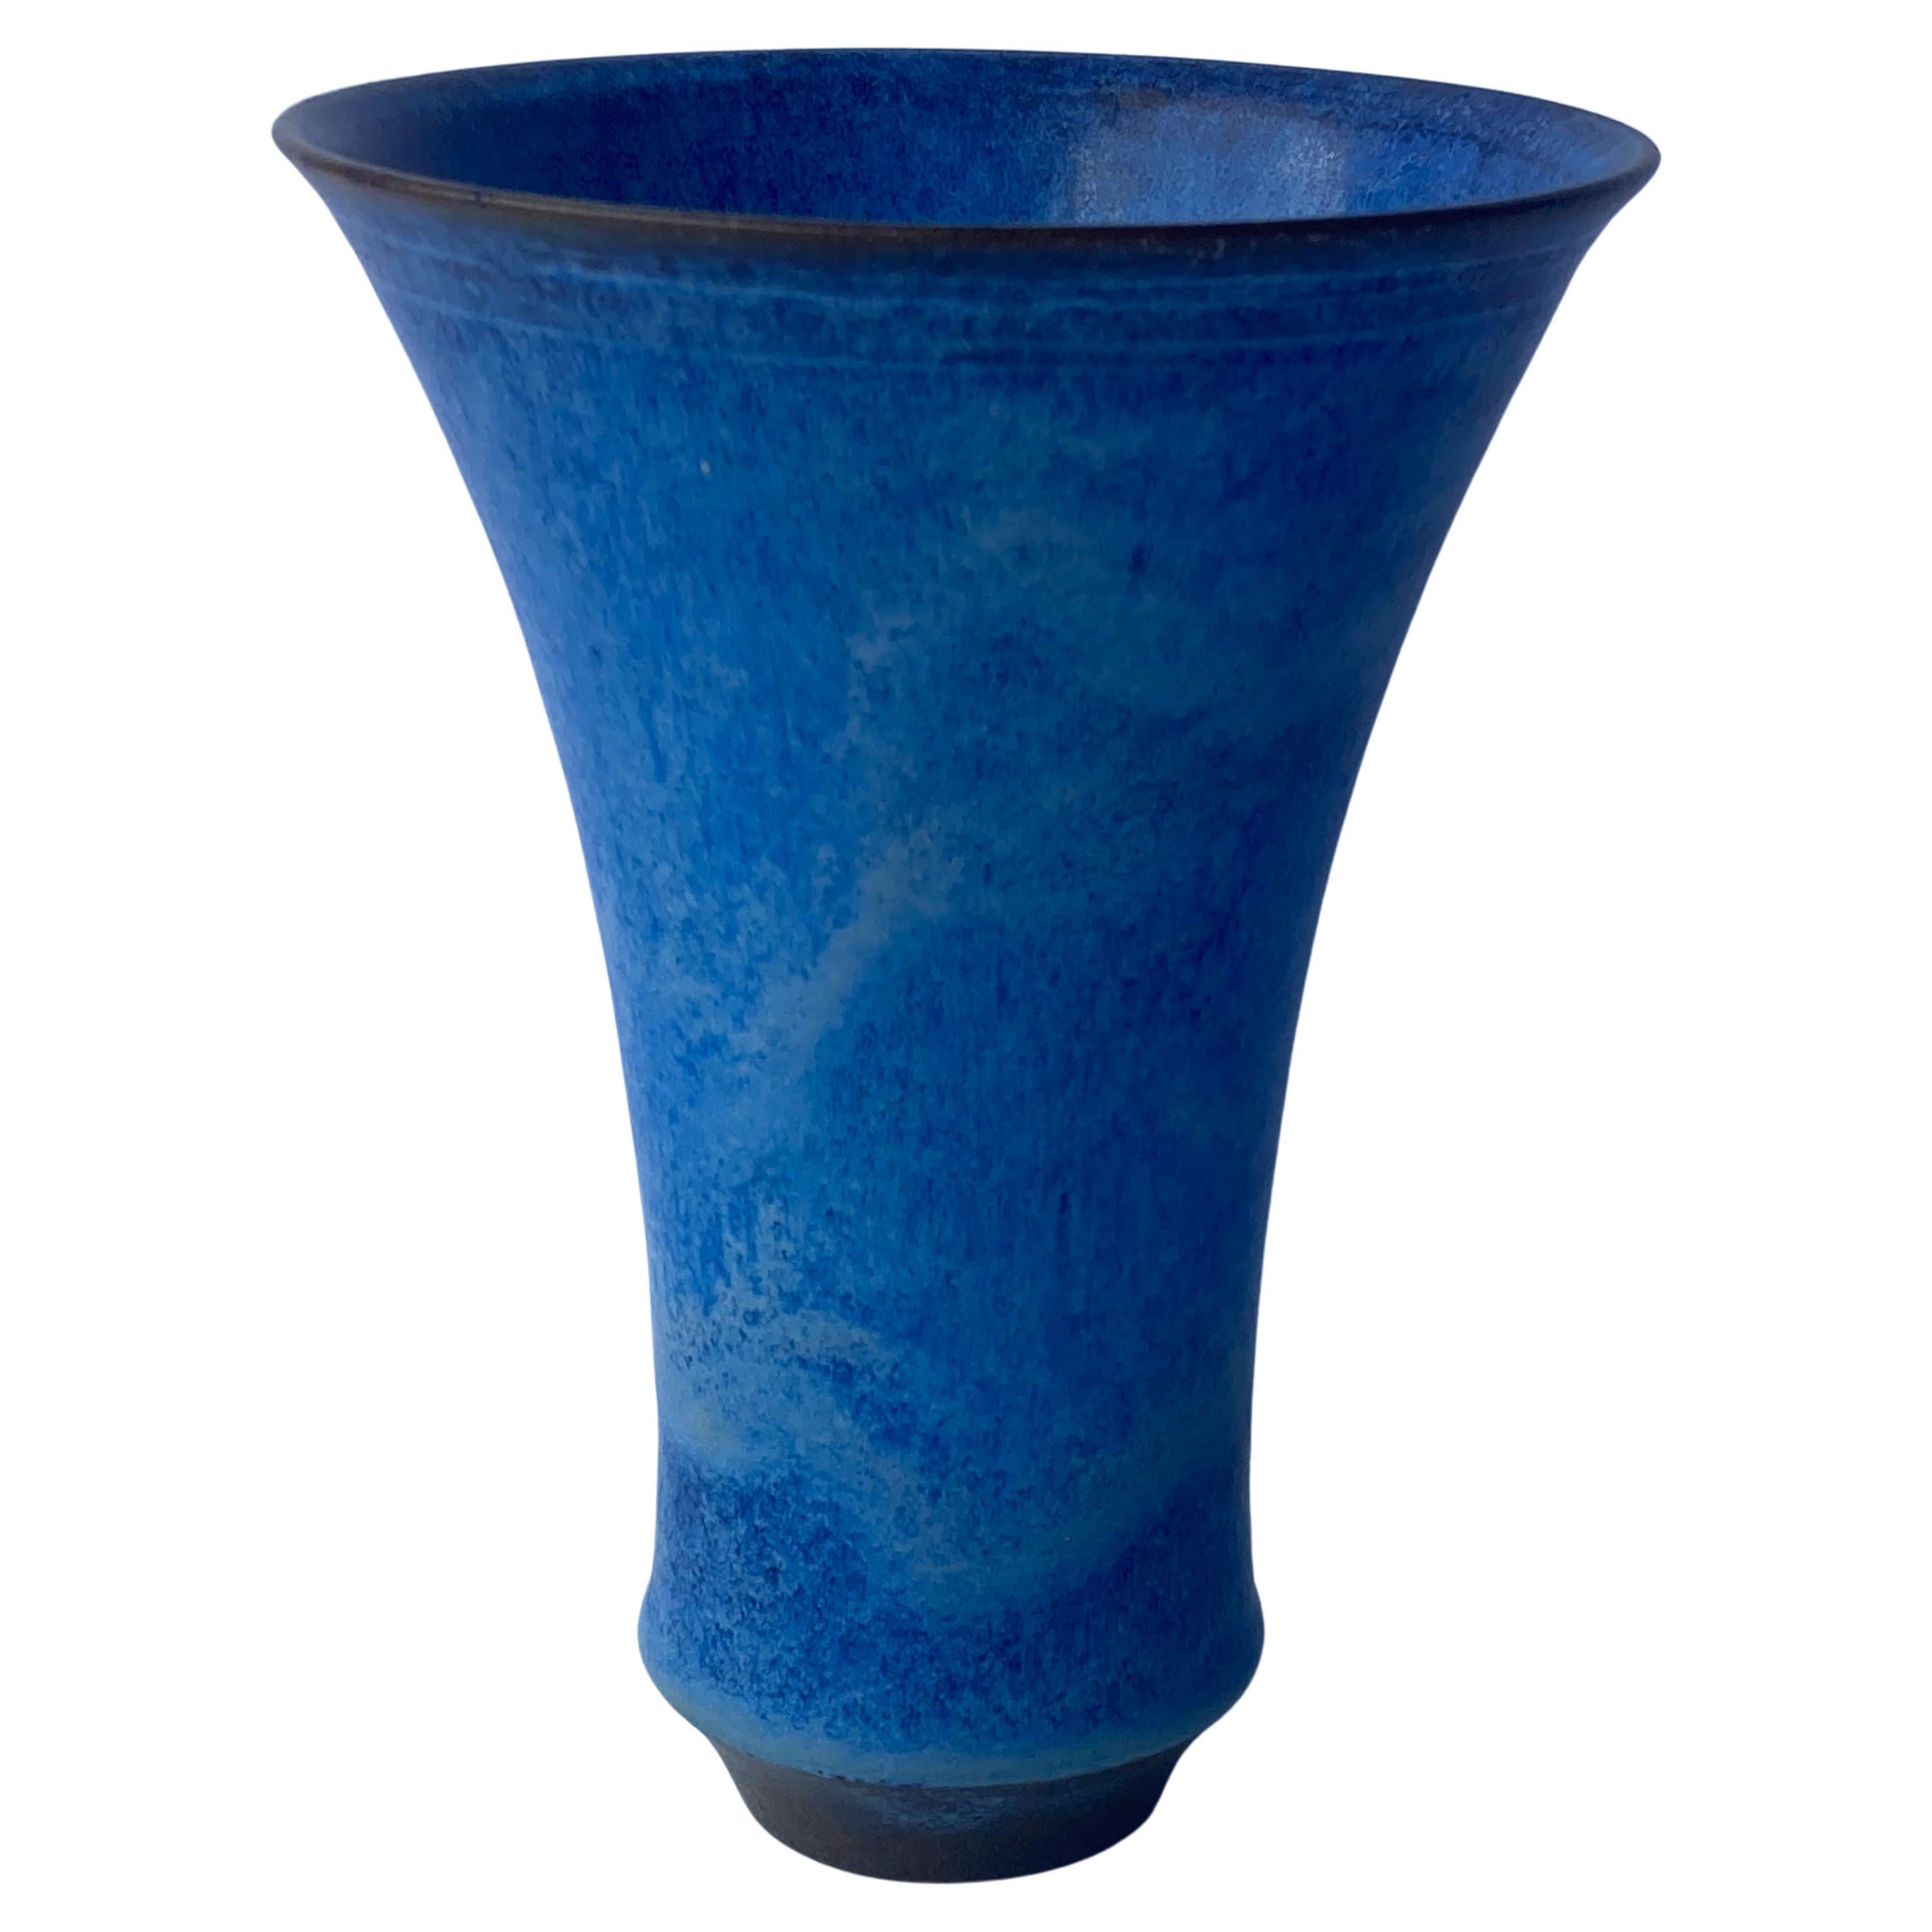 Otto and Gertrud Natzler Ceramic / Pottery, Blue Glaze, Vase, Signed